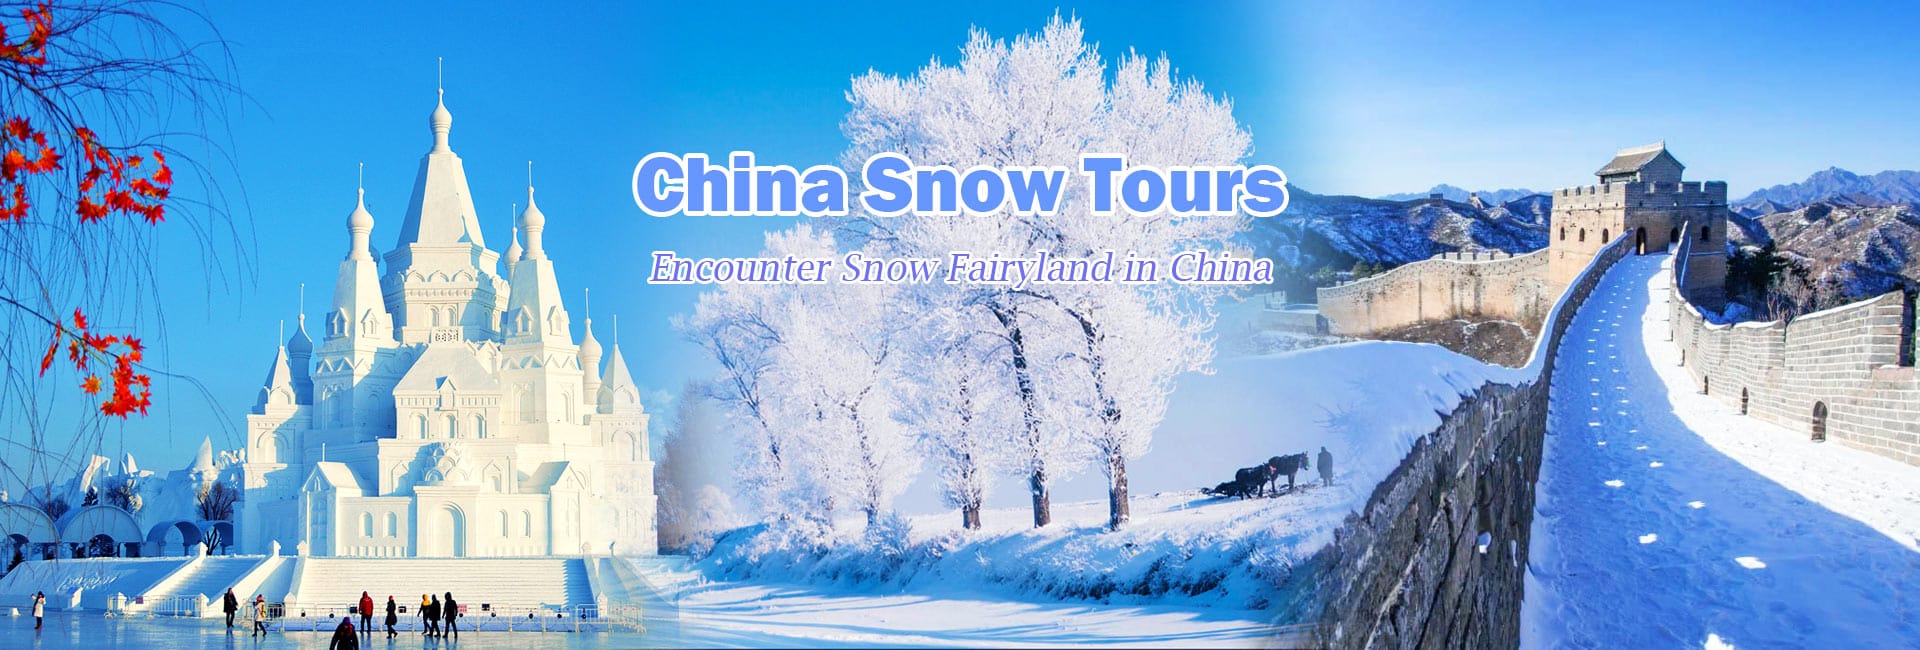 China Snow Tours